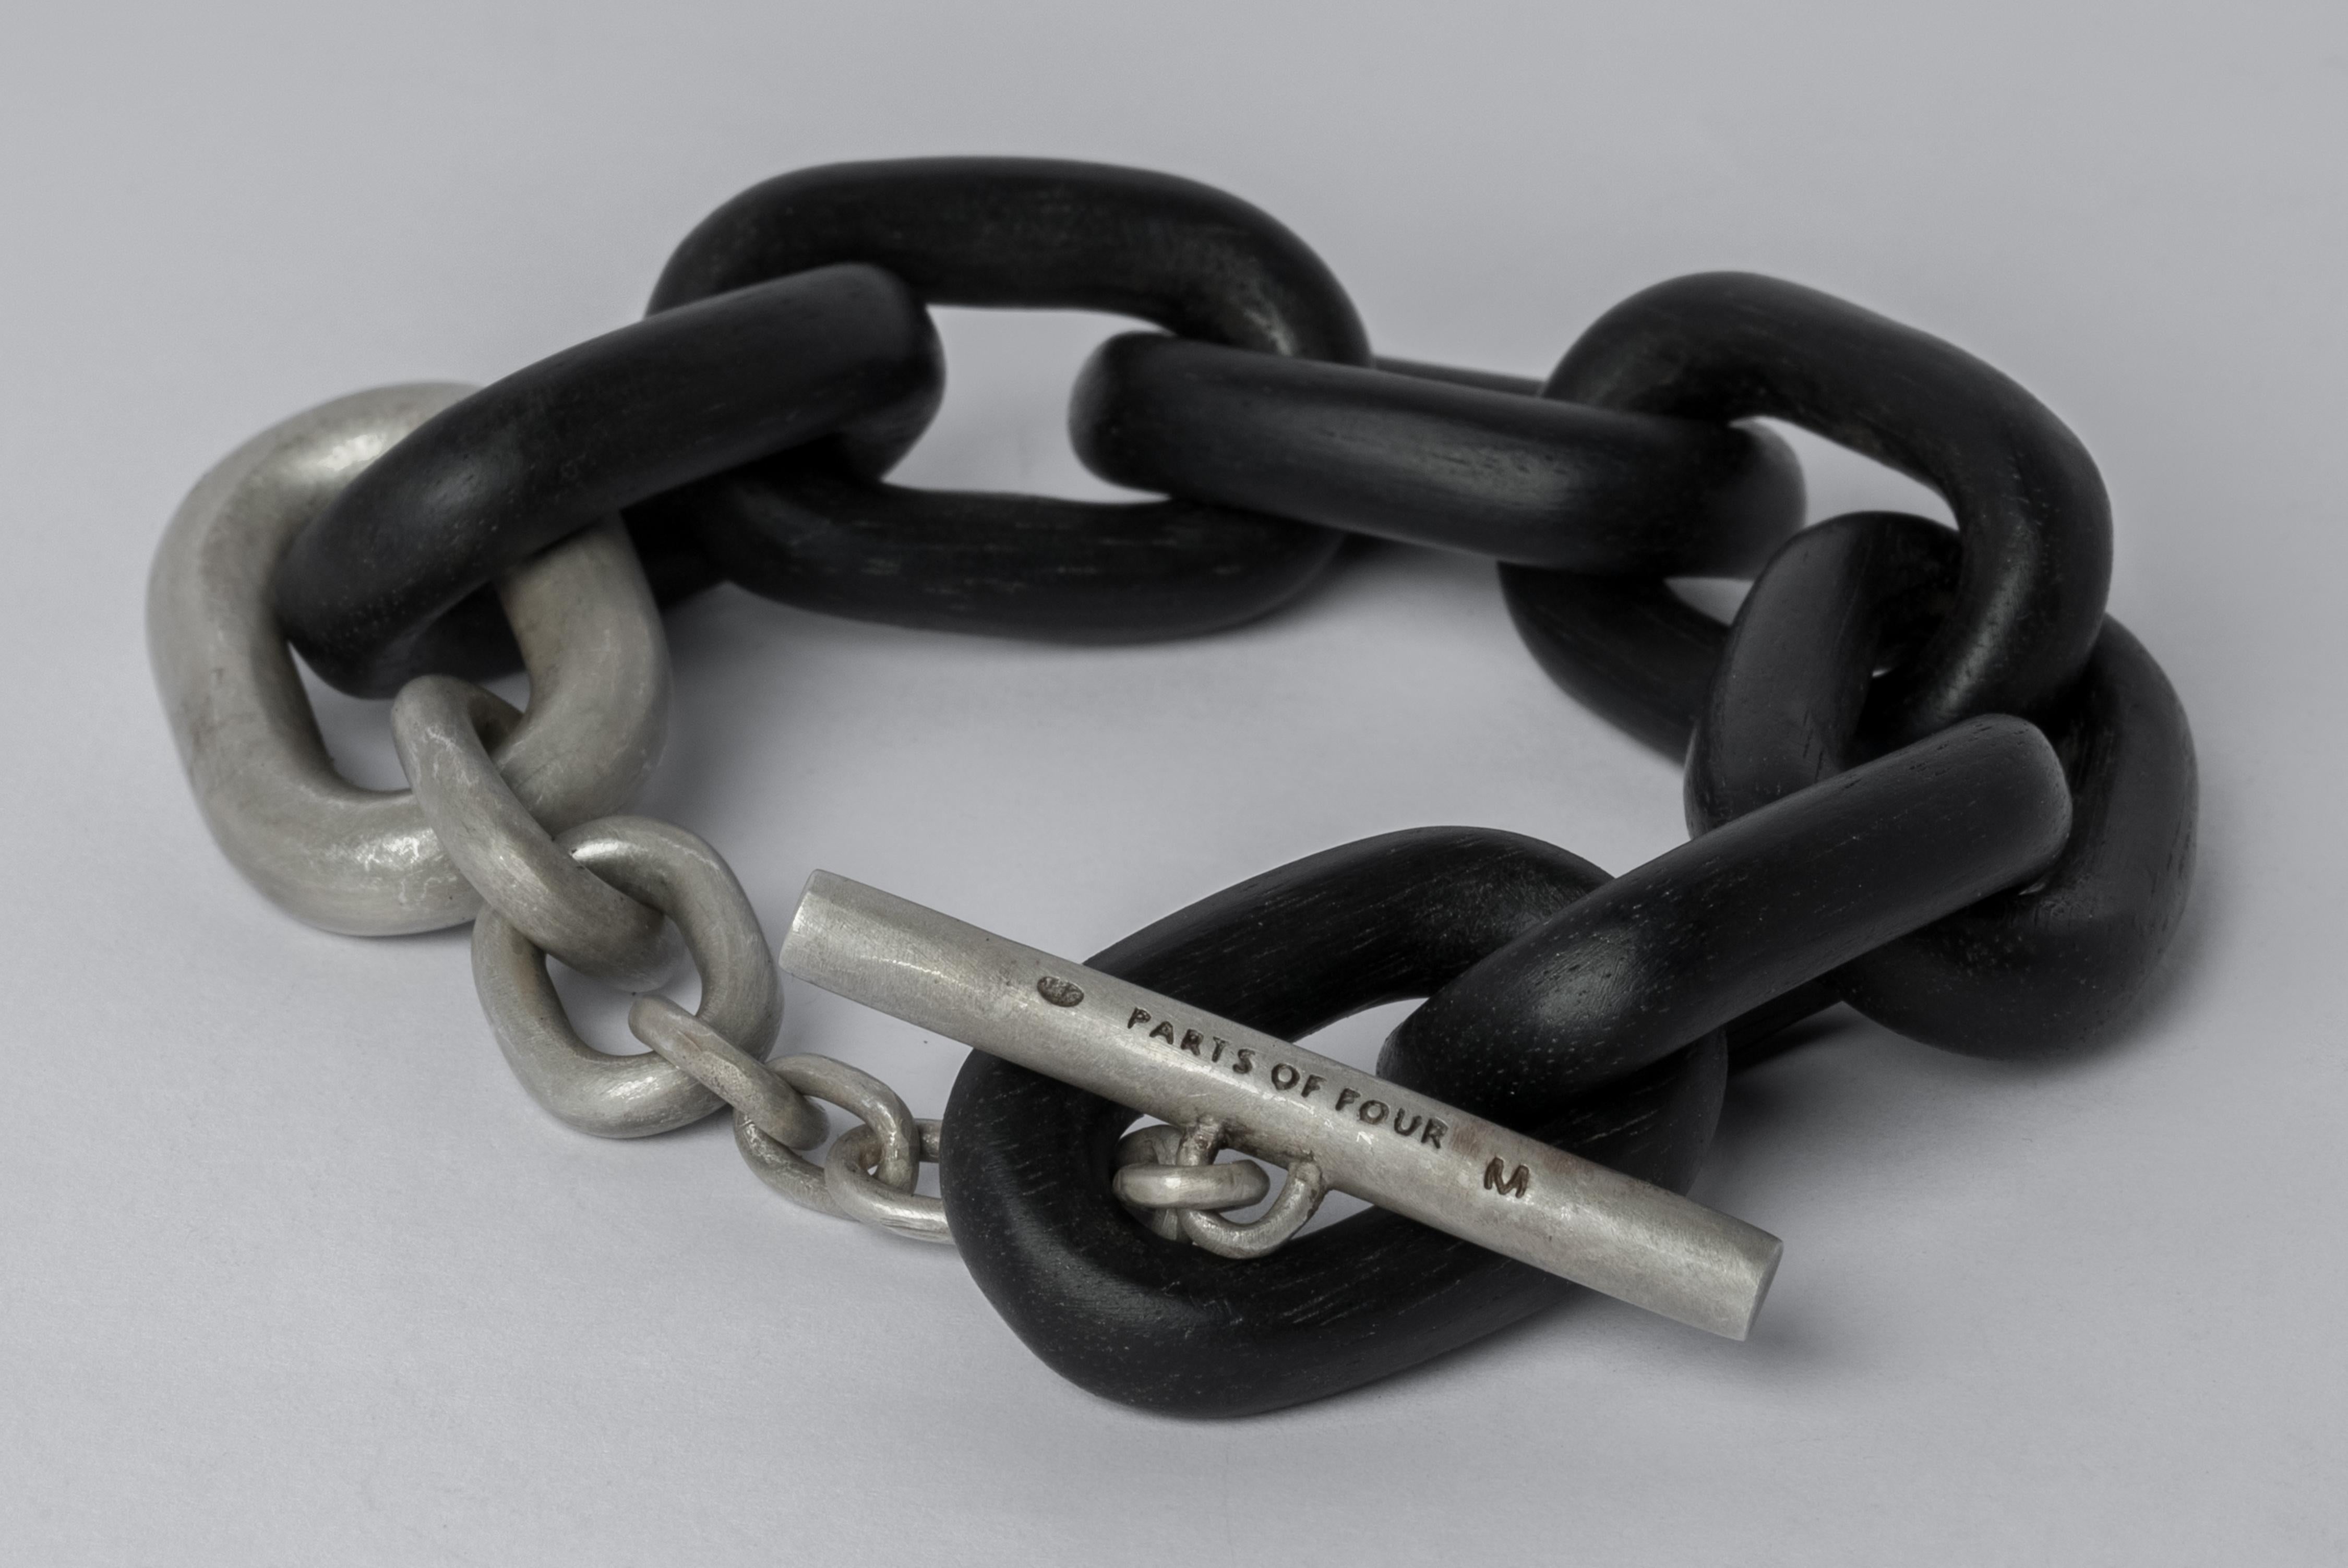 Bracelet in naturally black wood (Kayu Arang means 